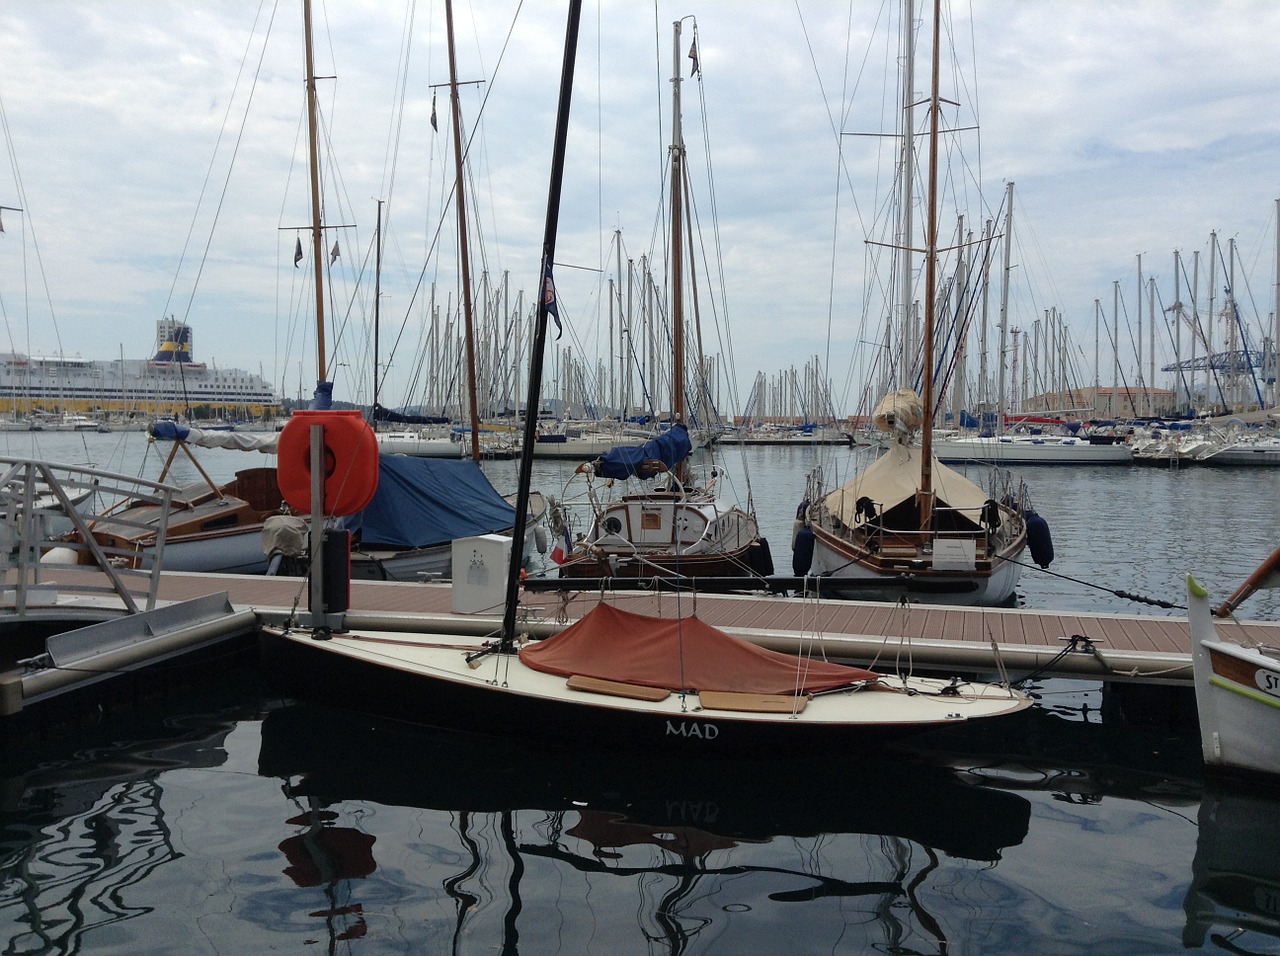 marseilles boating europe free photo